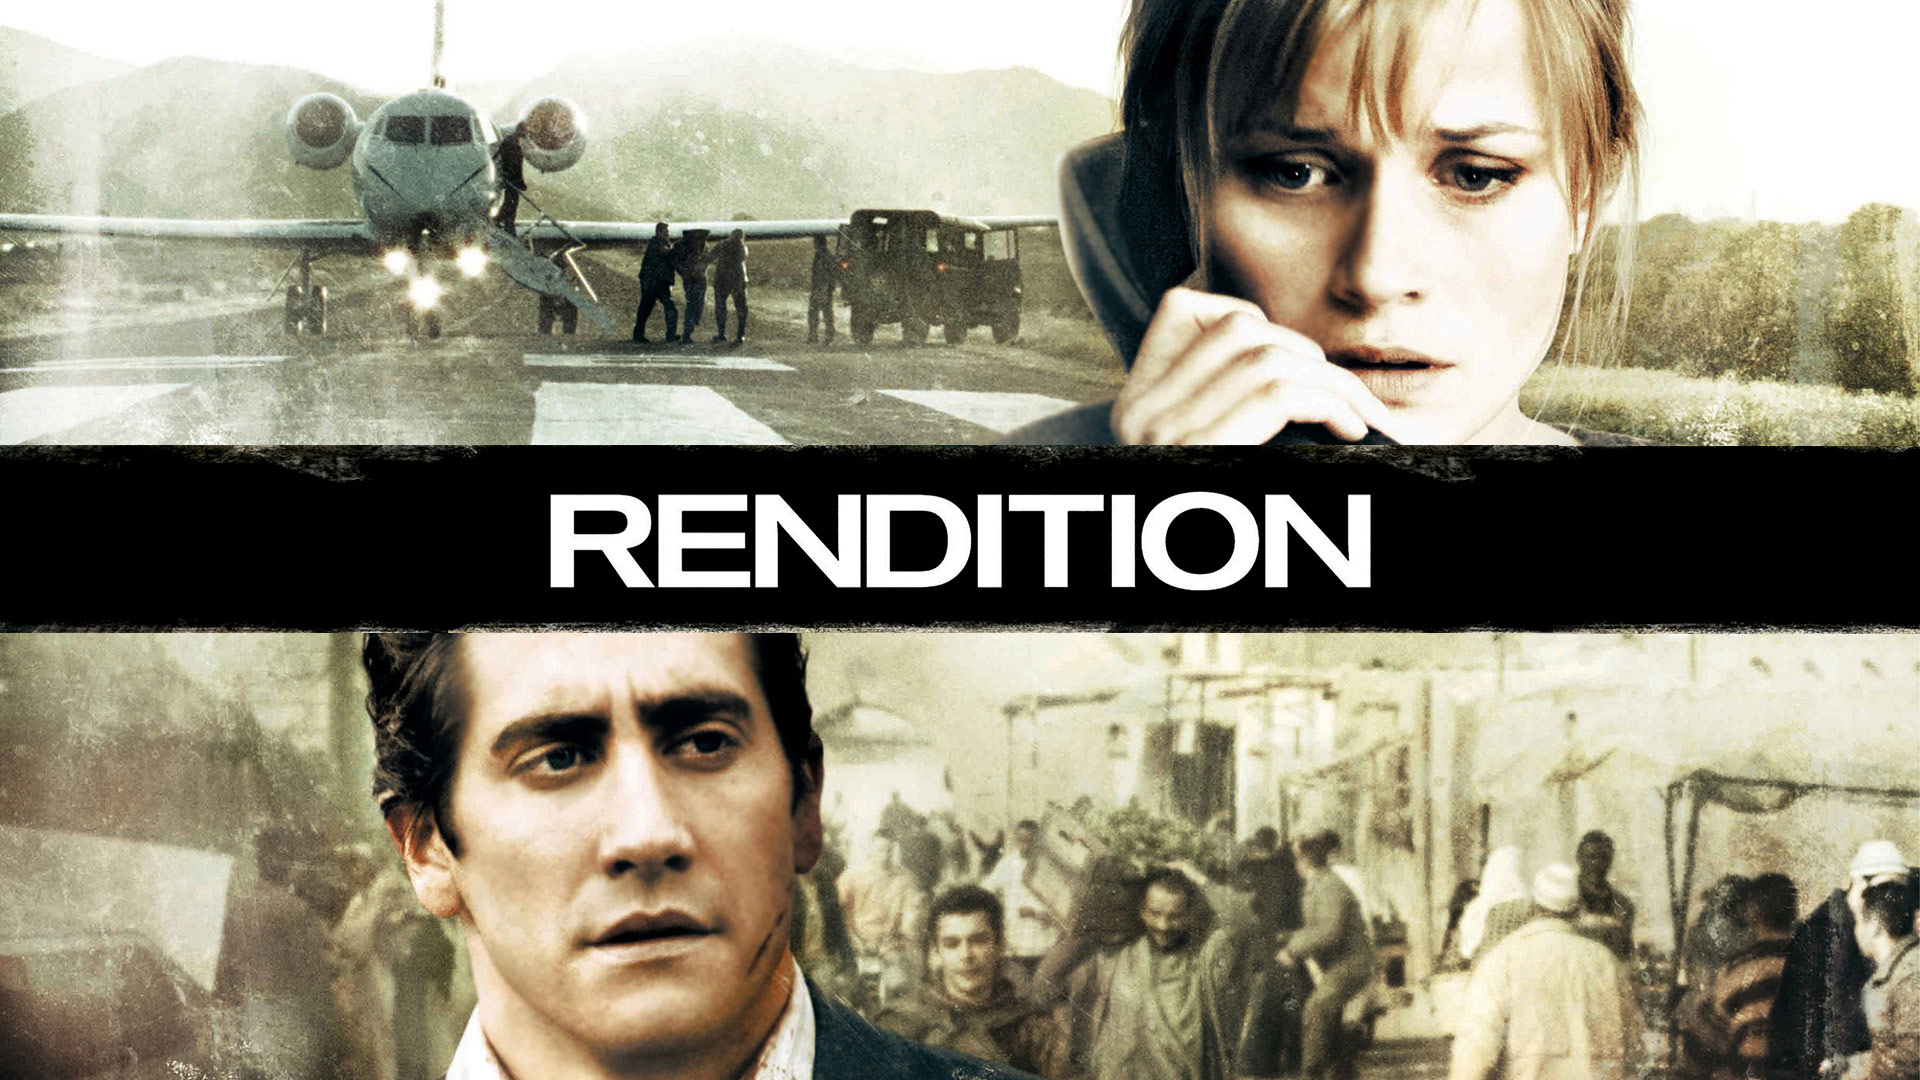 Rendition / Rendition (2007)